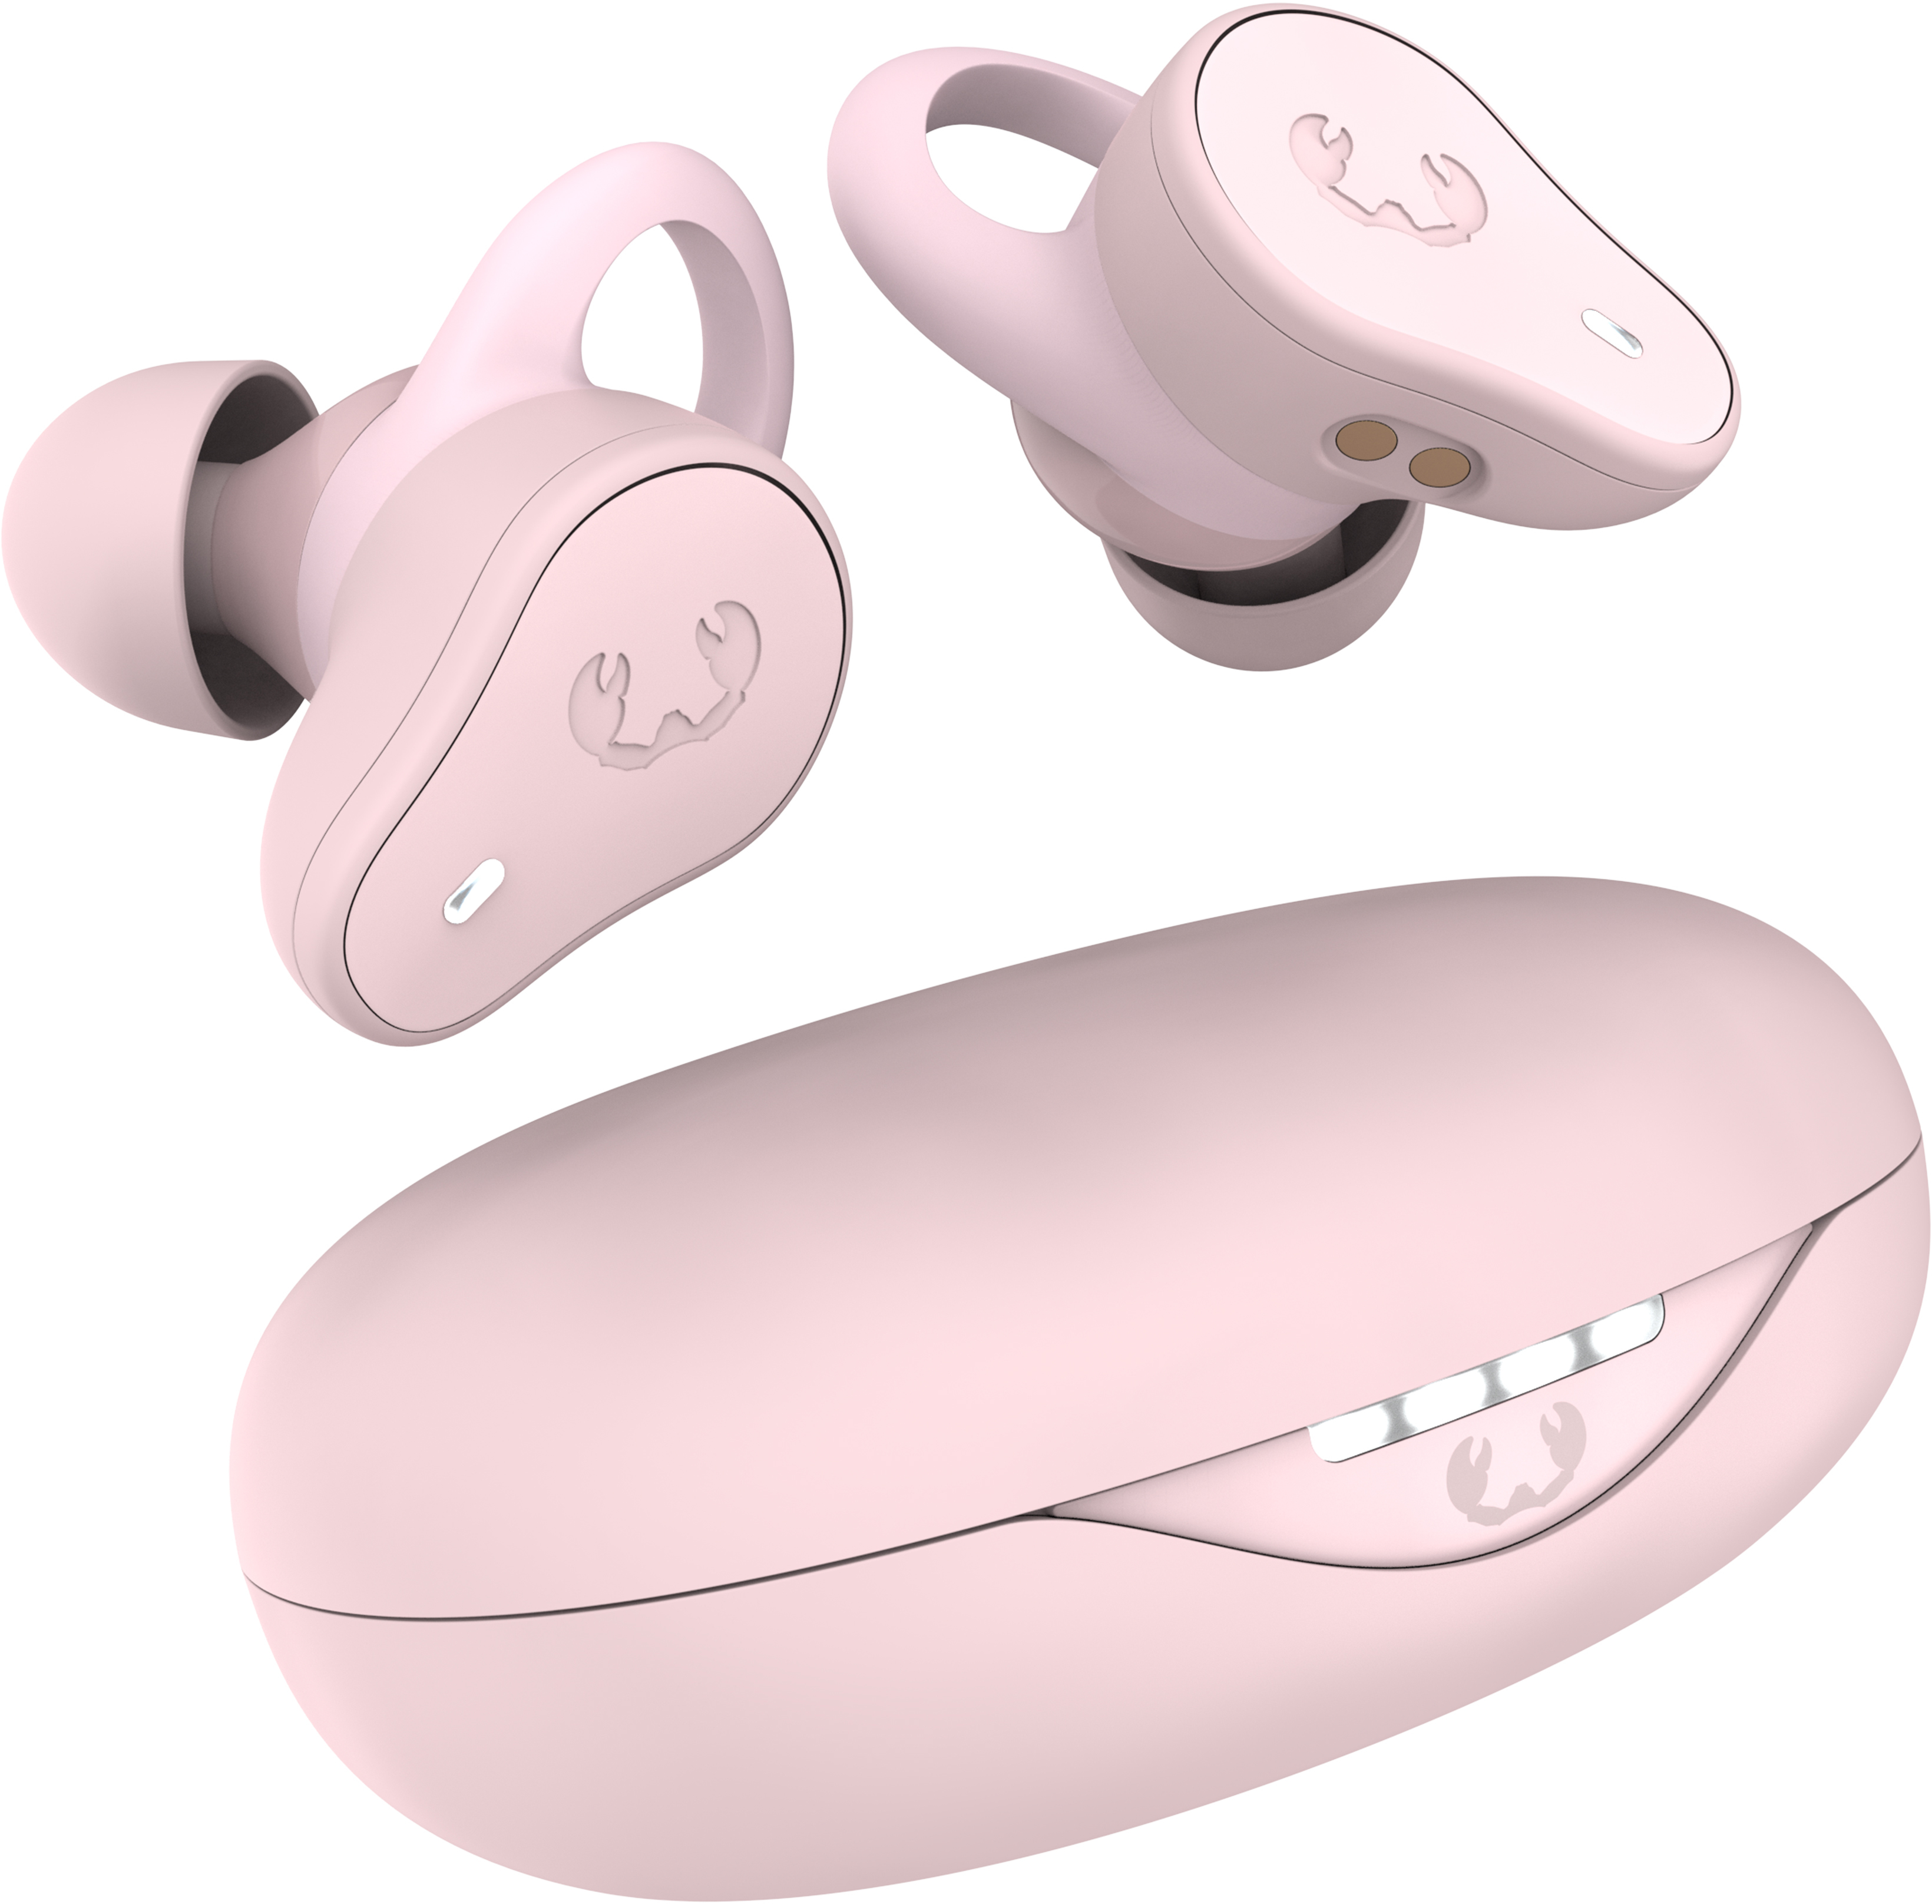 FRESH'N REBEL Twins Move - TWS earbuds 3TW1600SP Smokey Pink sport earbuds